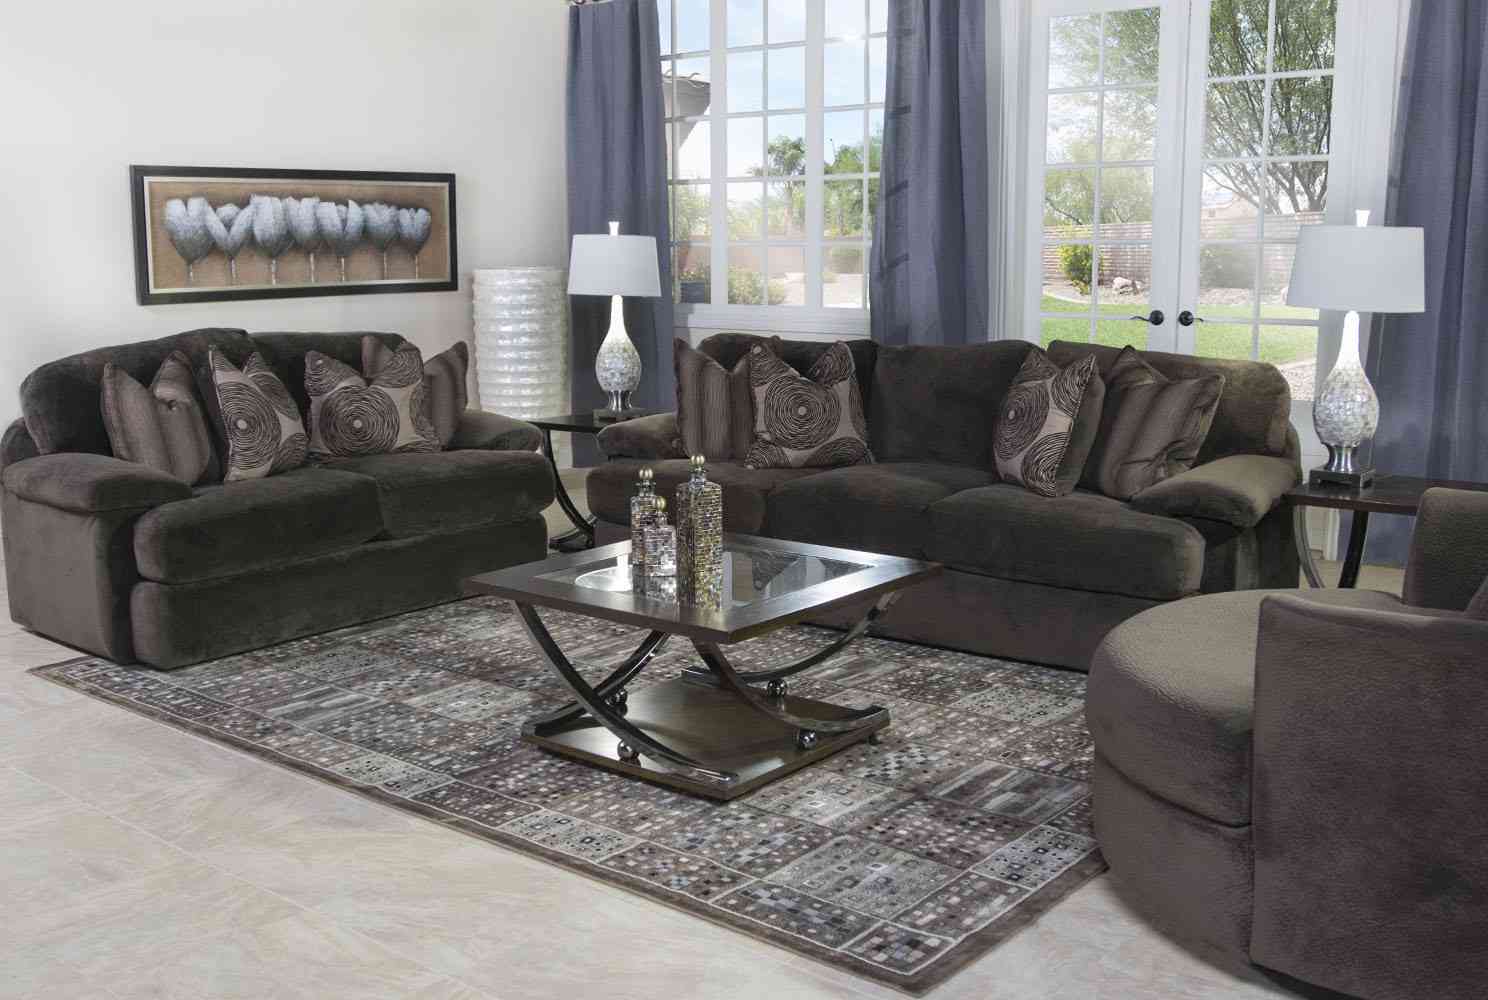 livingroom furniture sets Daystar removable seat cushions sofa media ...